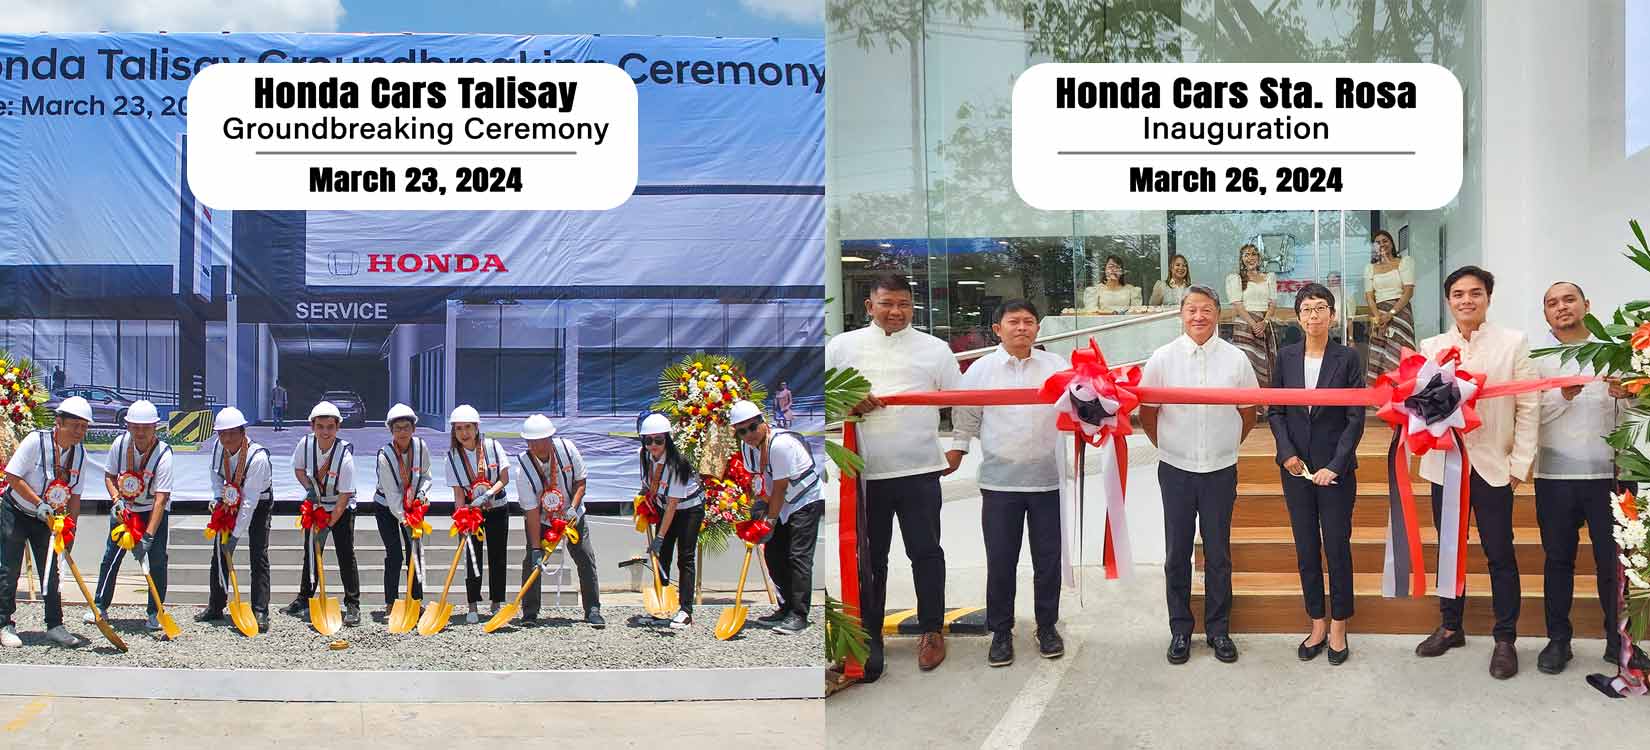 The groundbreaking of Honda Cars Talisay and the inauguration of Honda Cars Sta. Rosa